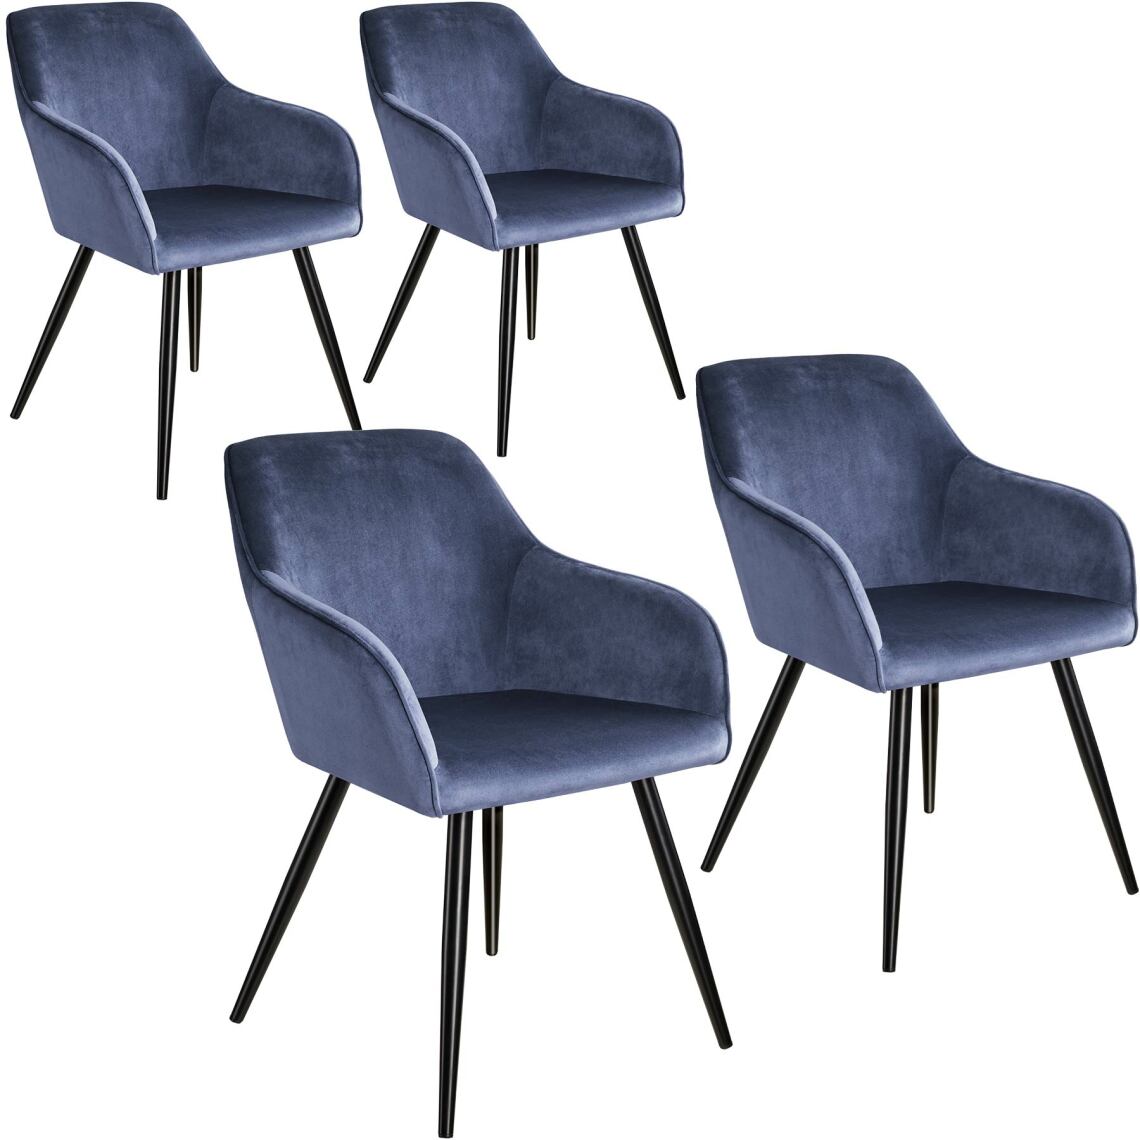 Tectake - 4 Chaises MARILYN Design en Velours Style Scandinave - bleu/noir - Chaises